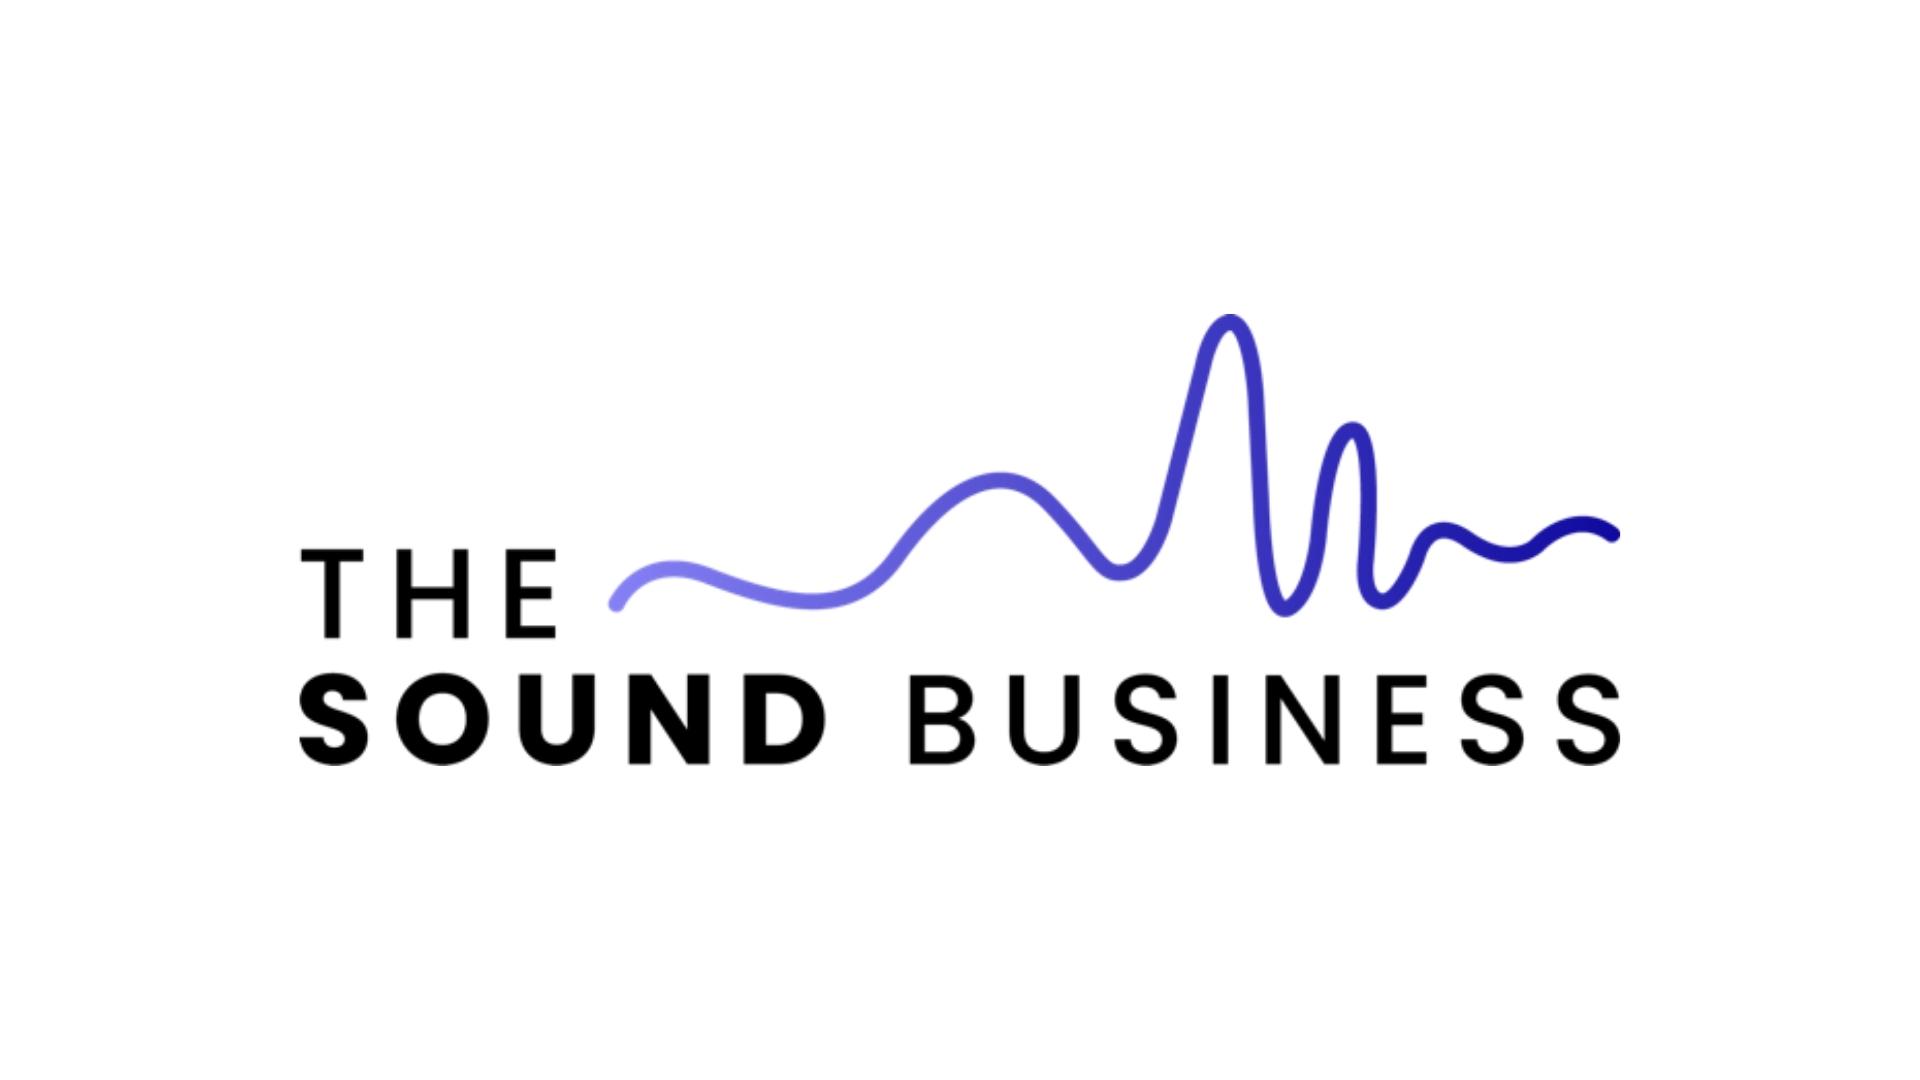 Scott Menz launches business podcast service